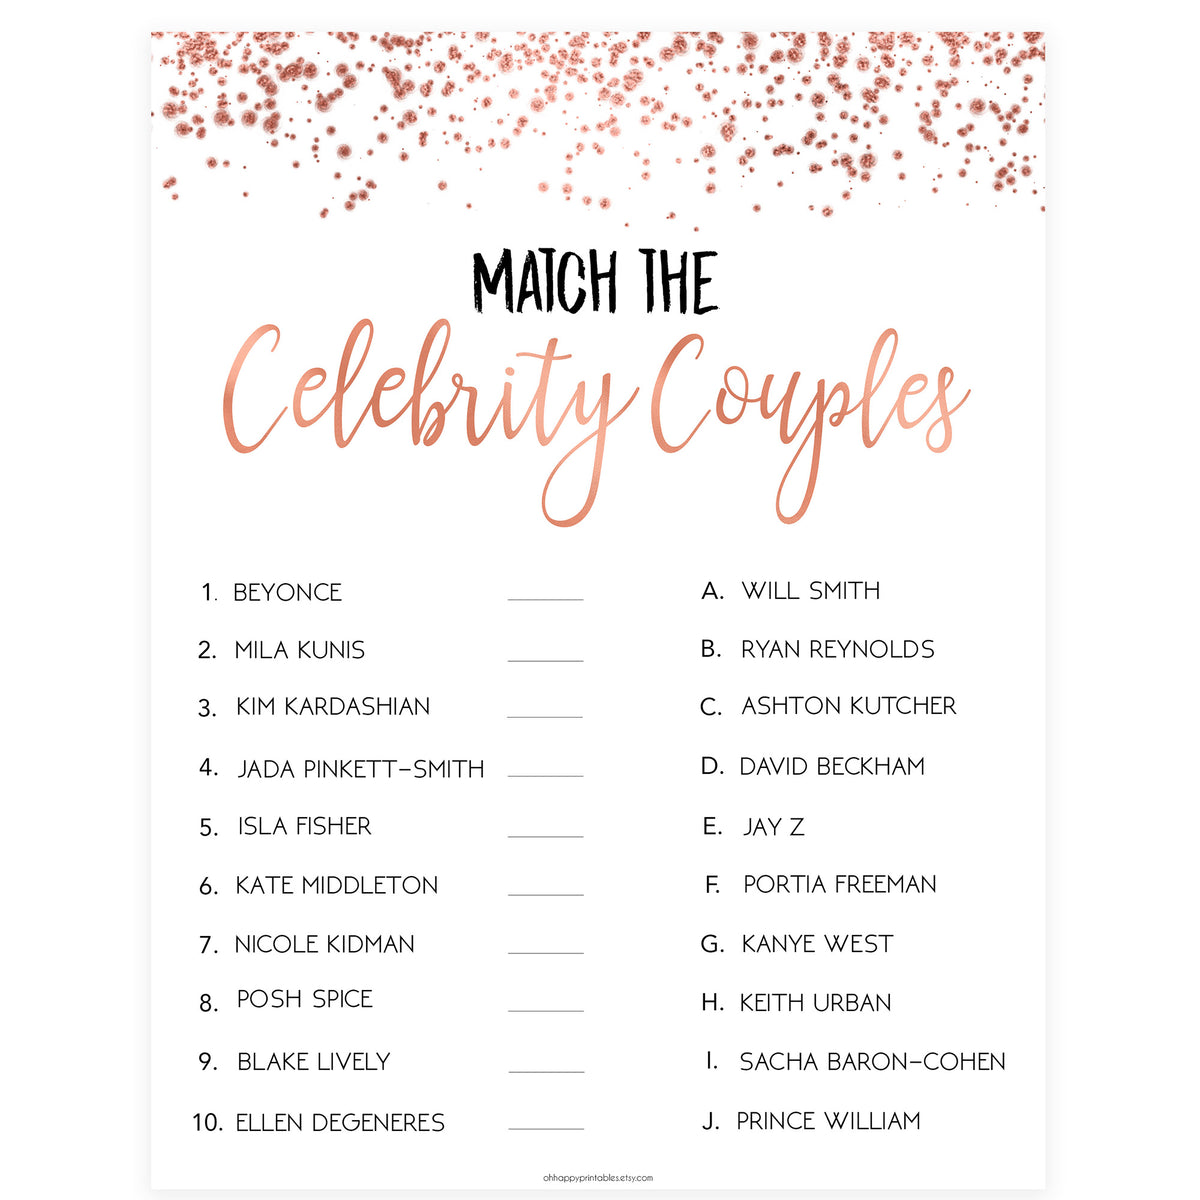 Match Celebrity Couples Game - Rose Gold Foil